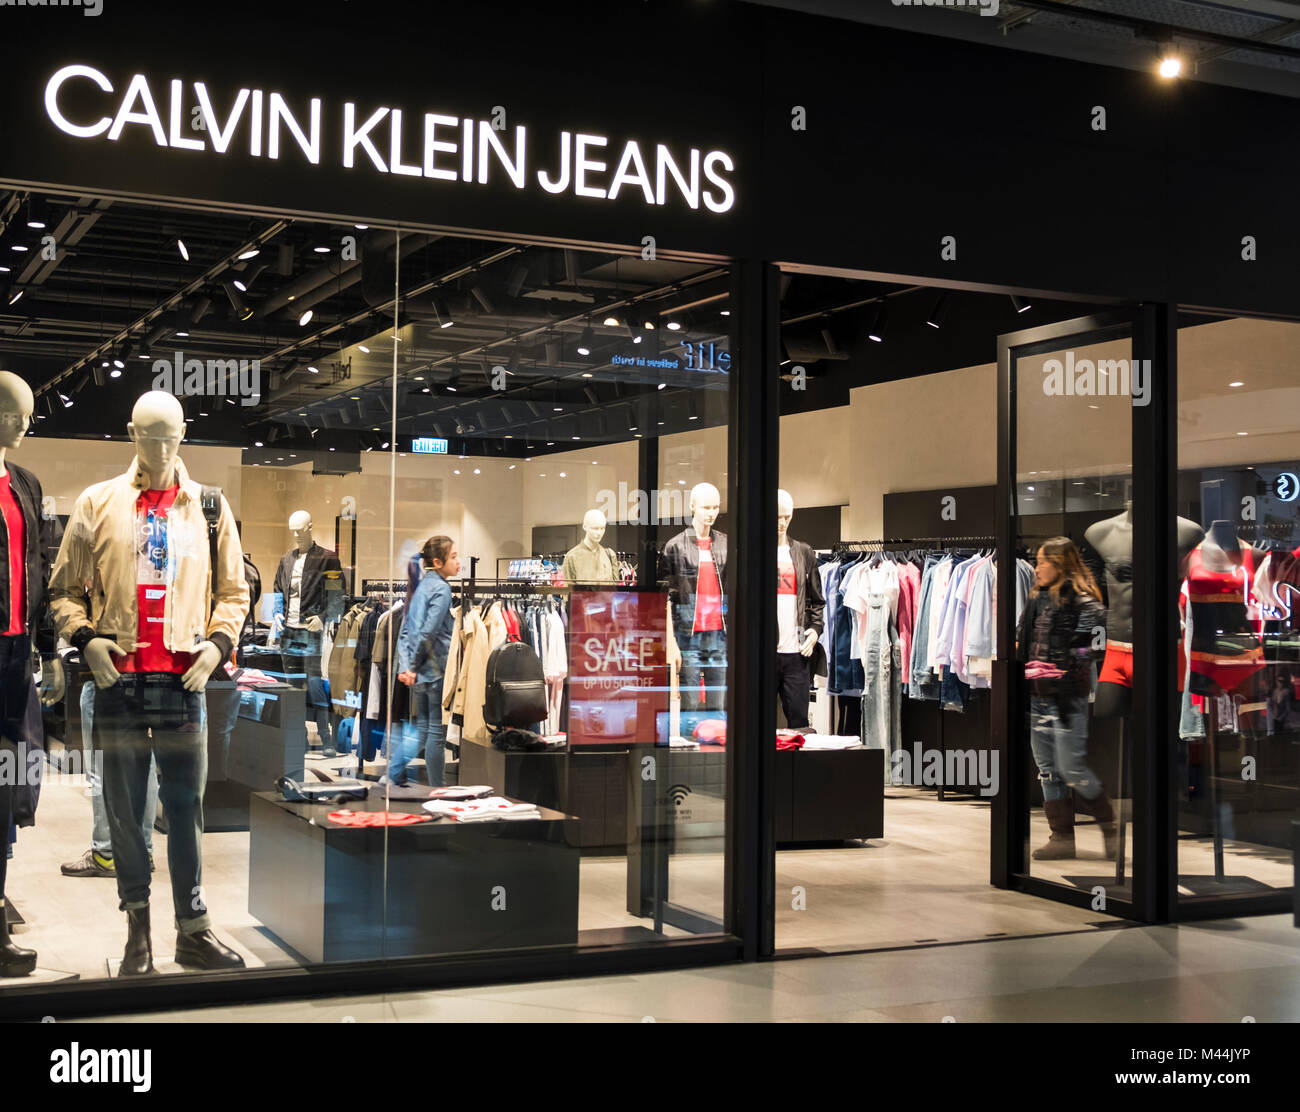 Hongkong - Februar 3, 2018: Calvin Klein Jeans Store in Hongkong; Die  warnaco Group pflegt Calvin Klein Jeans und entsprechenden Outlet Stores ca  Stockfotografie - Alamy